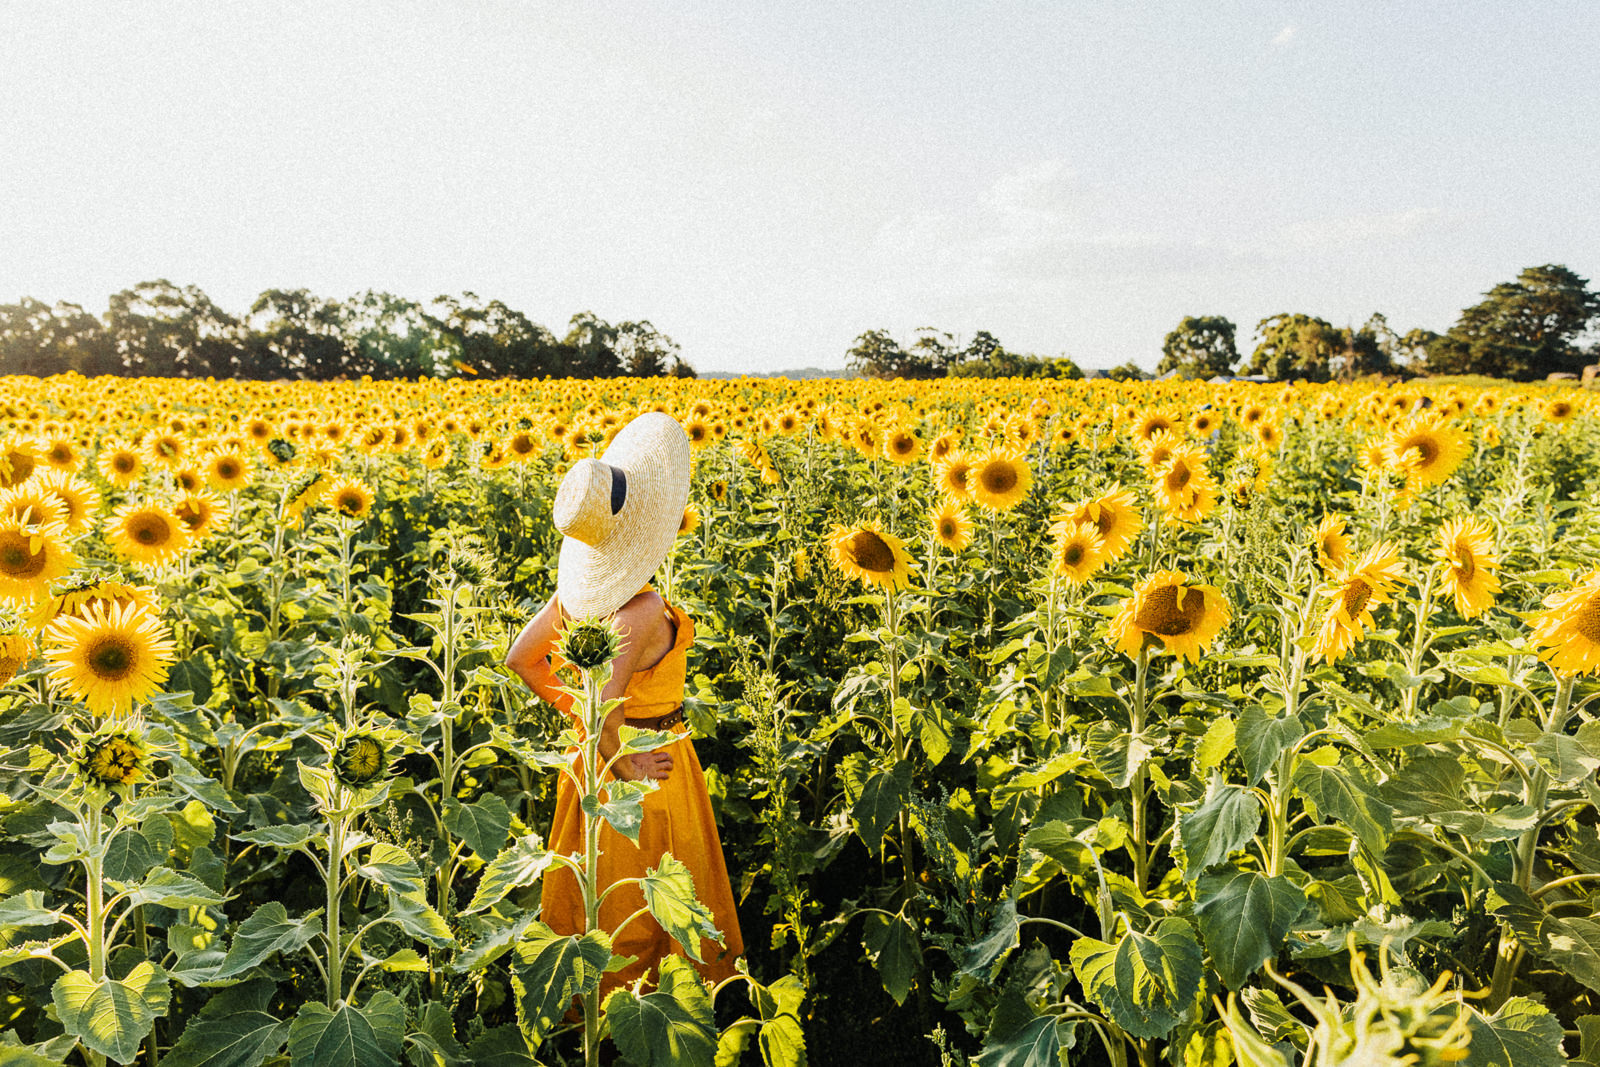 large sunflowerfield near Melbourne, Australia